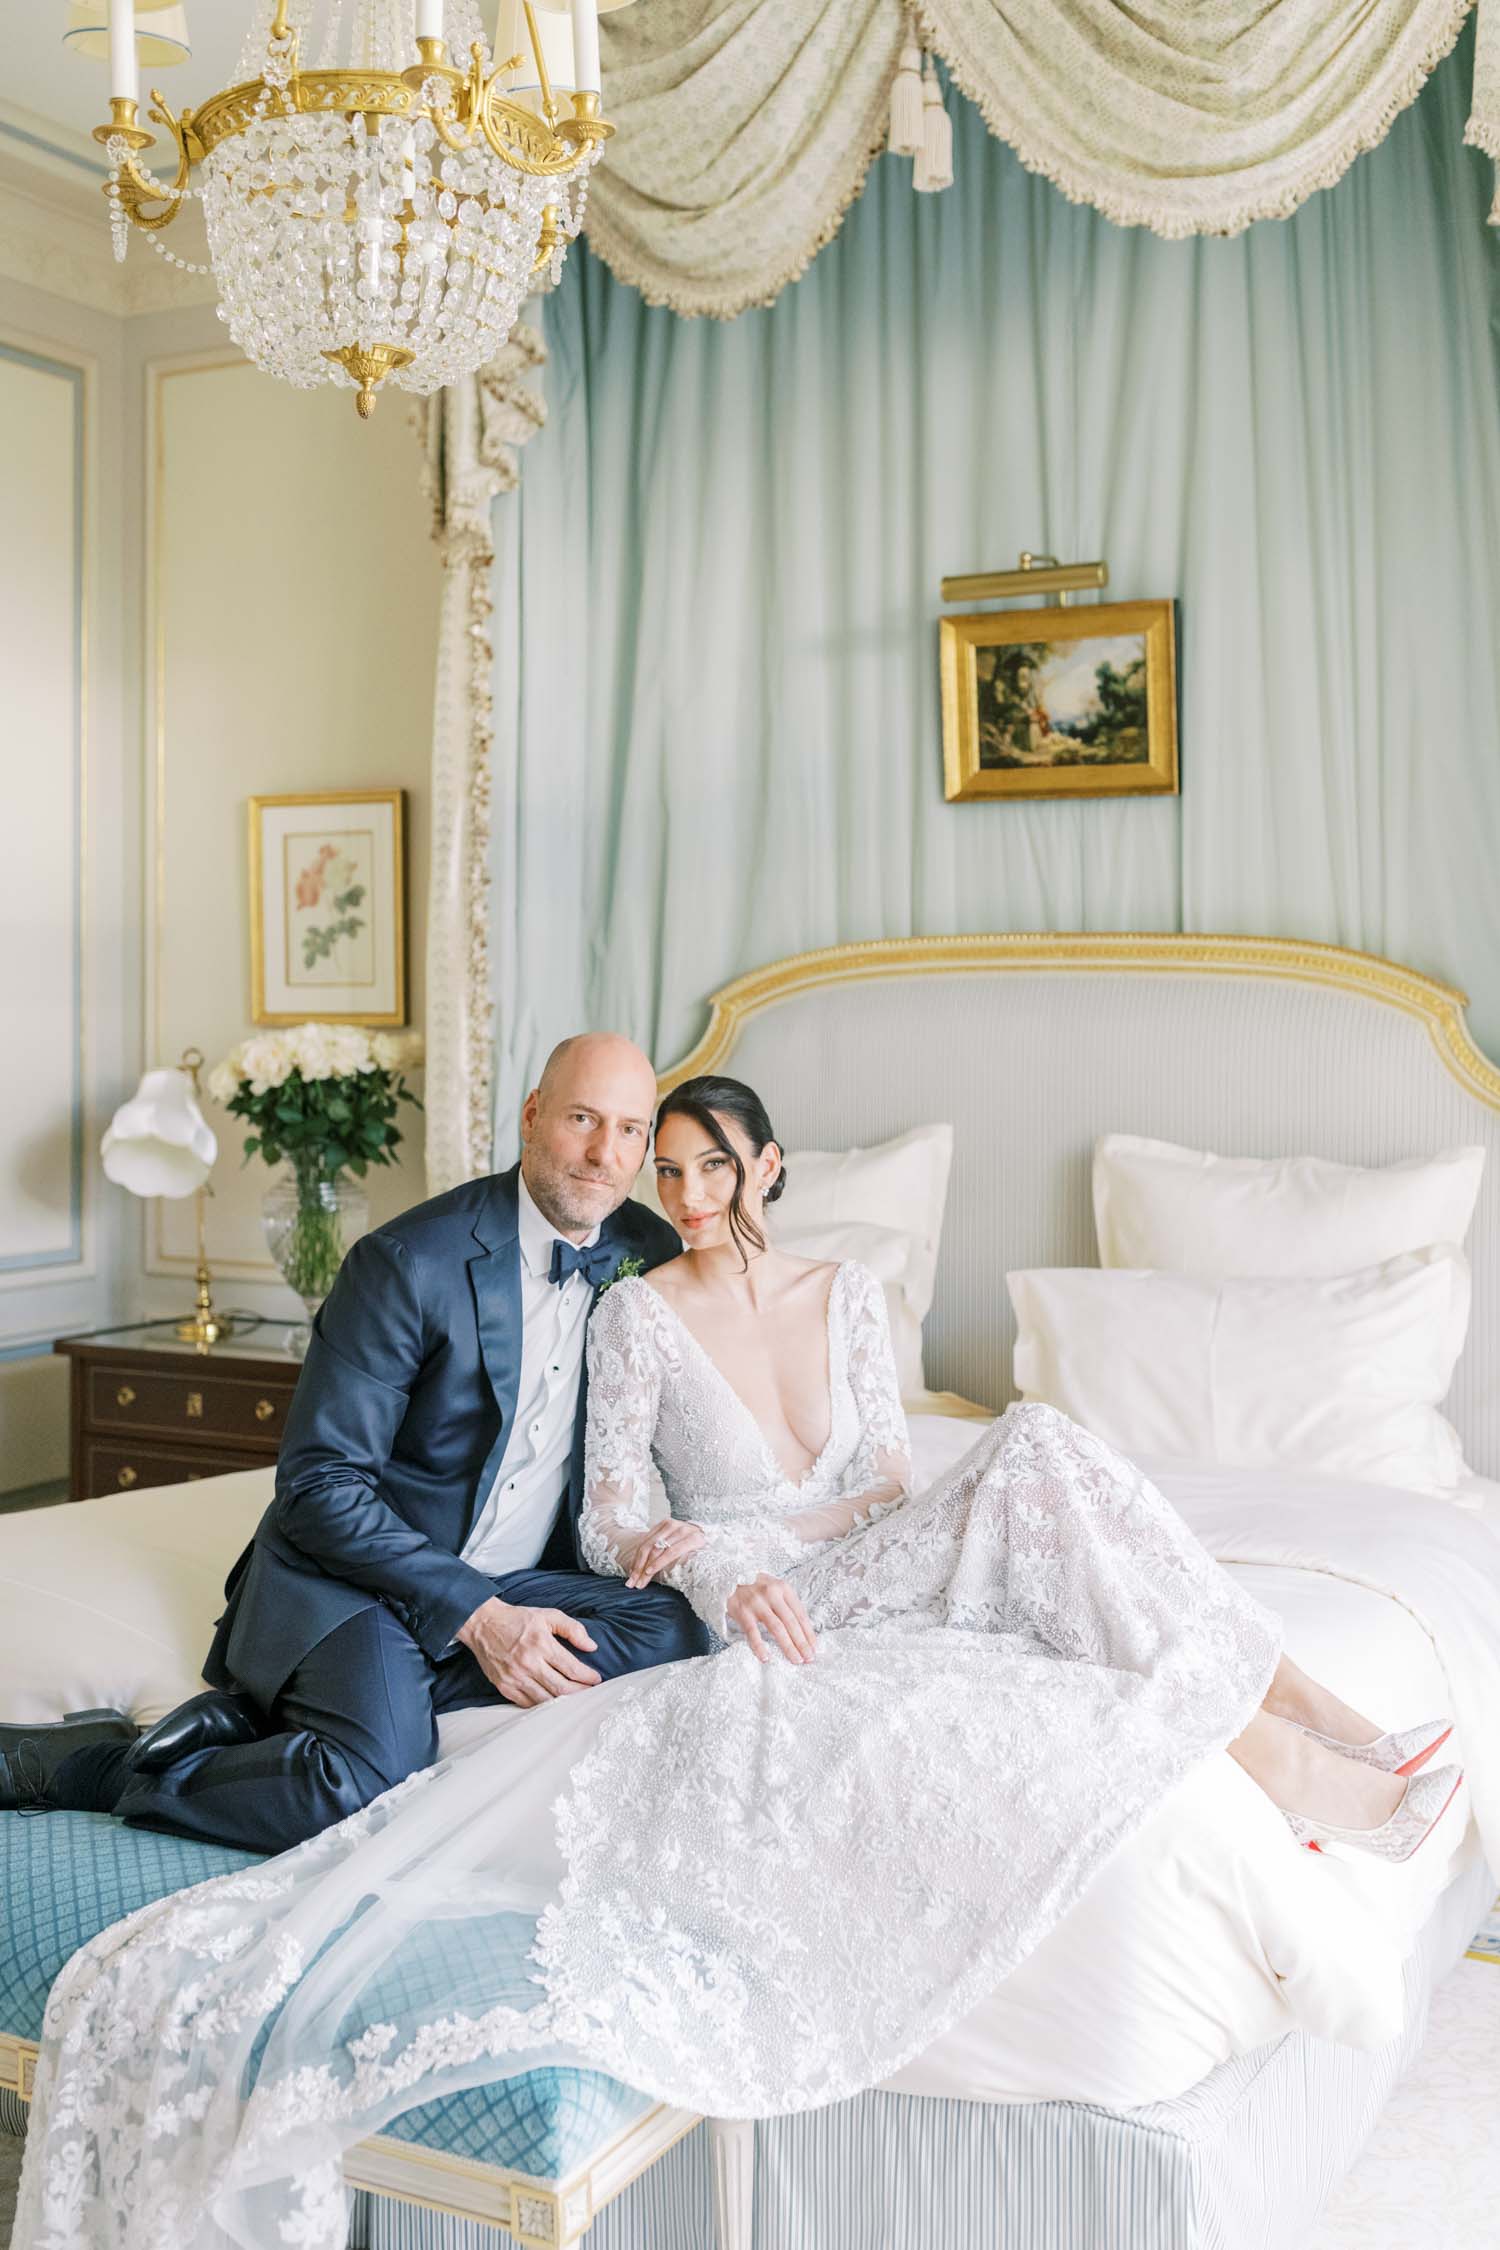 Top Paris Wedding Photographers | Molly Carr Photography